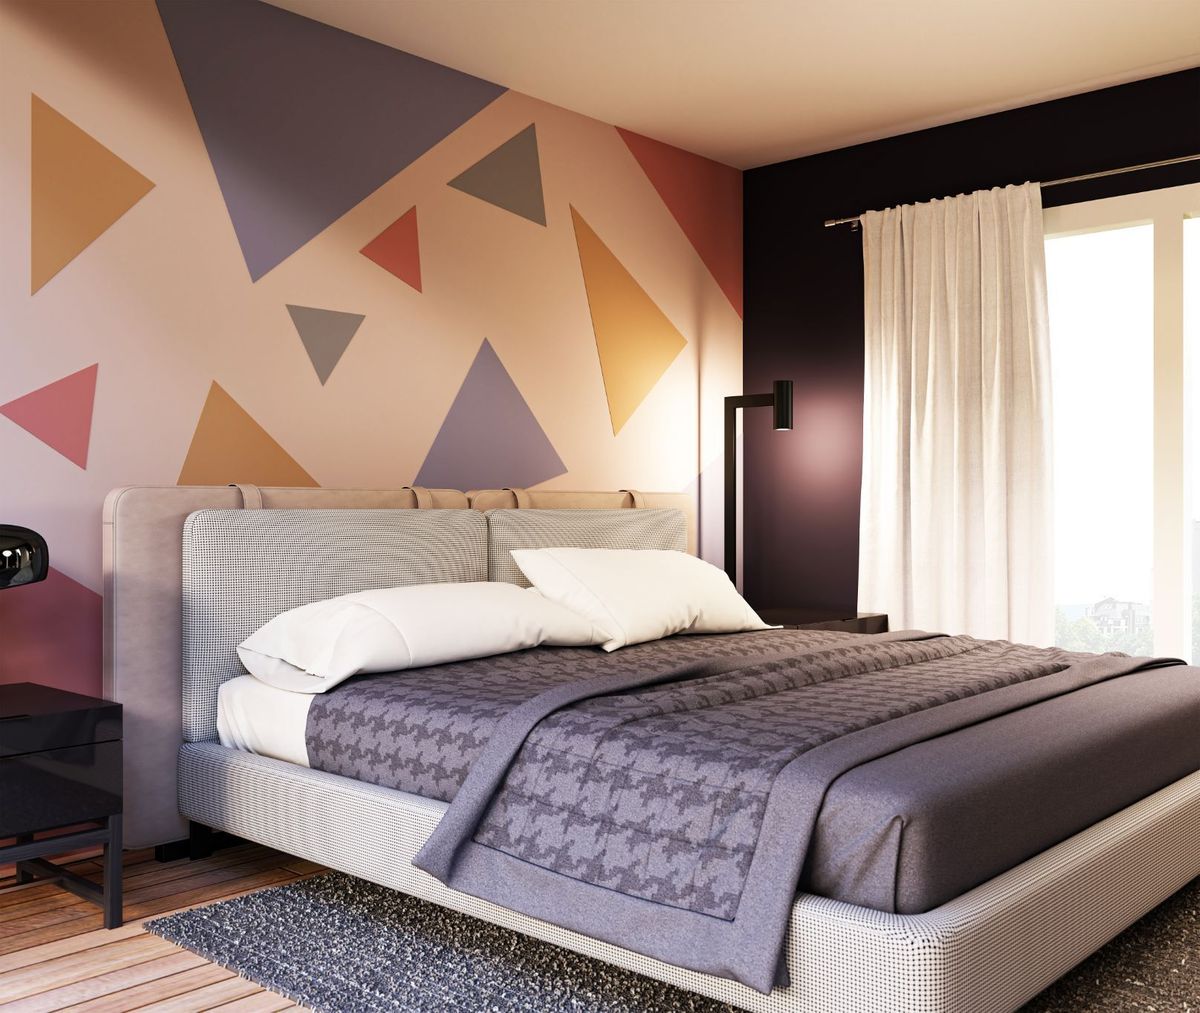 Geometric patterns in bedroom decor 